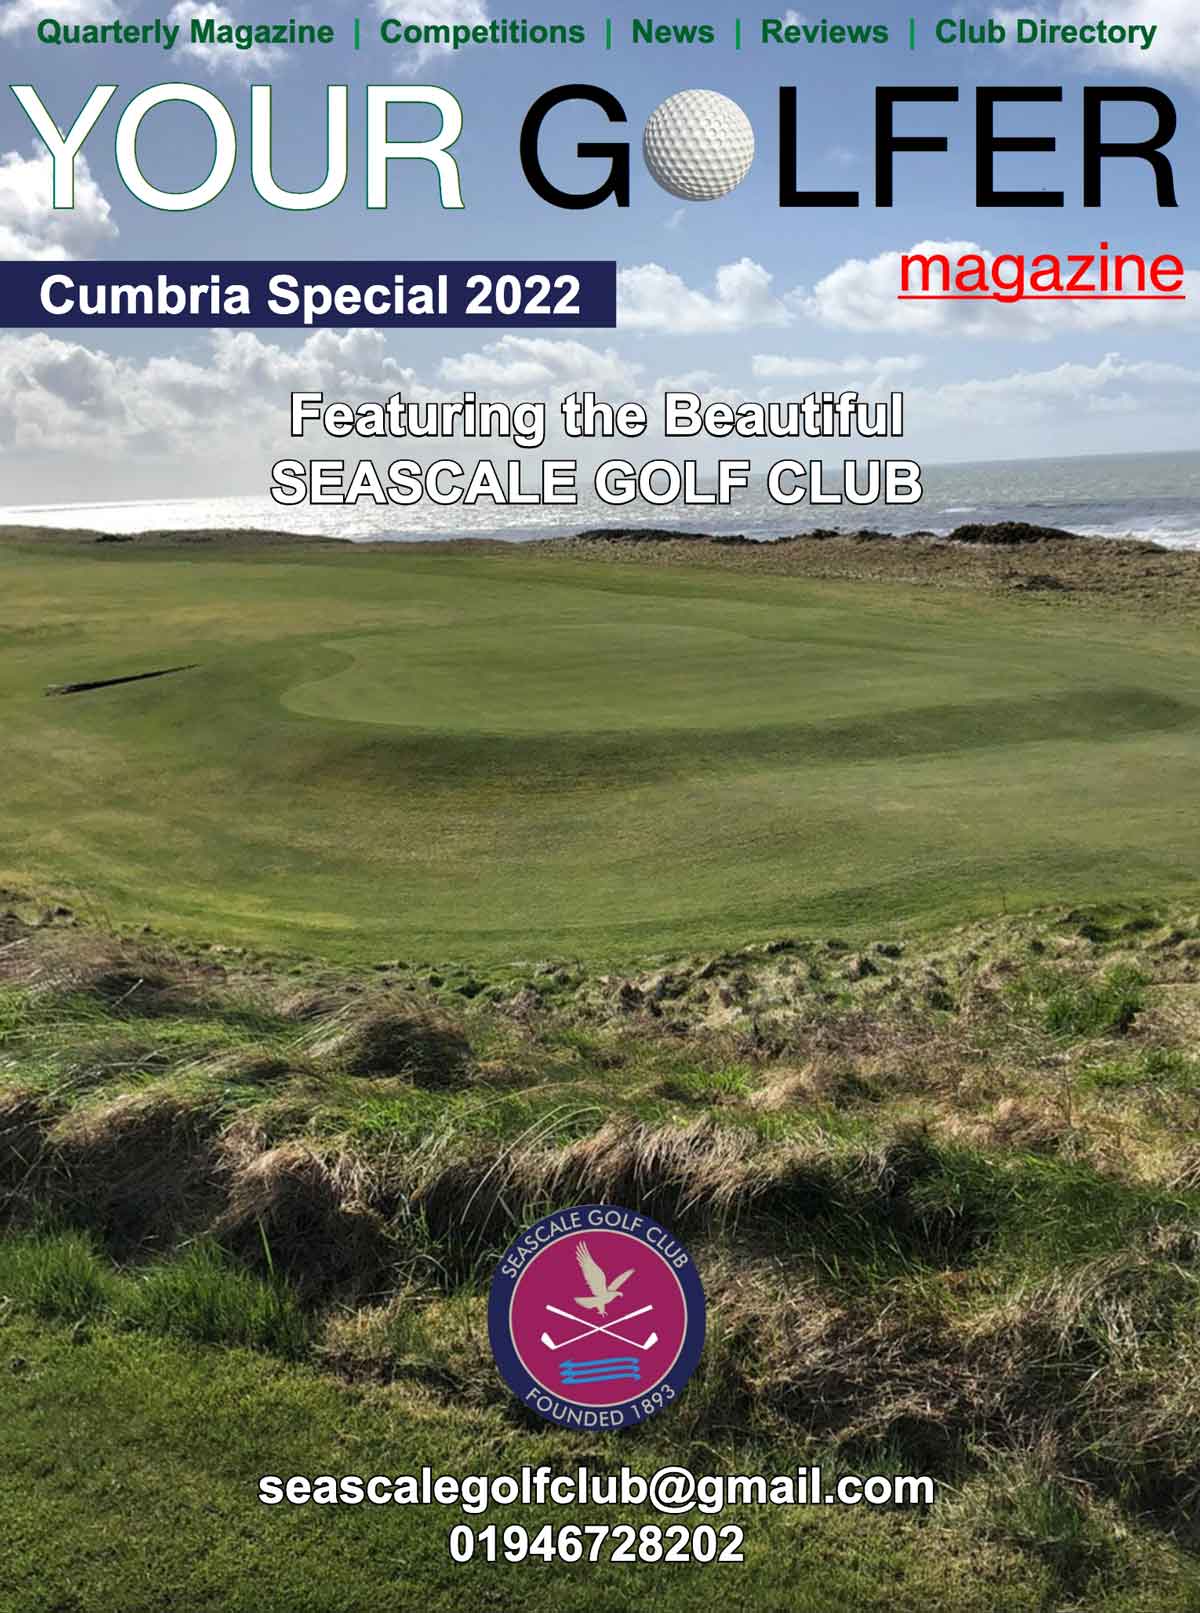 Your Golfer Magazine Cumbria Special Edition 2022